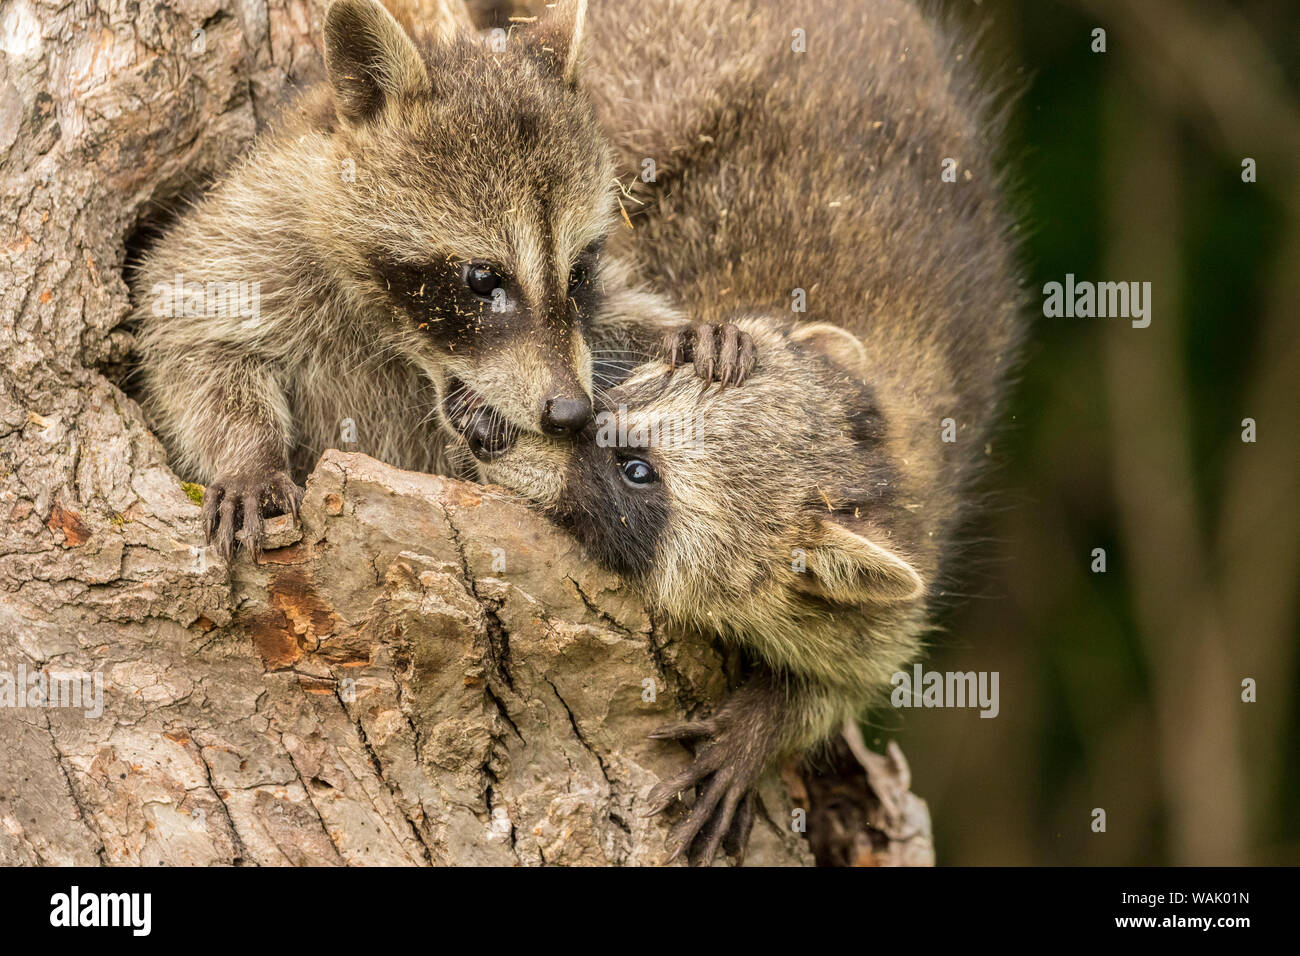 Pine County. Captive raccoon babies. Credit as: Cathy and Gordon Illg / Jaynes Gallery / DanitaDelimont.com Stock Photo